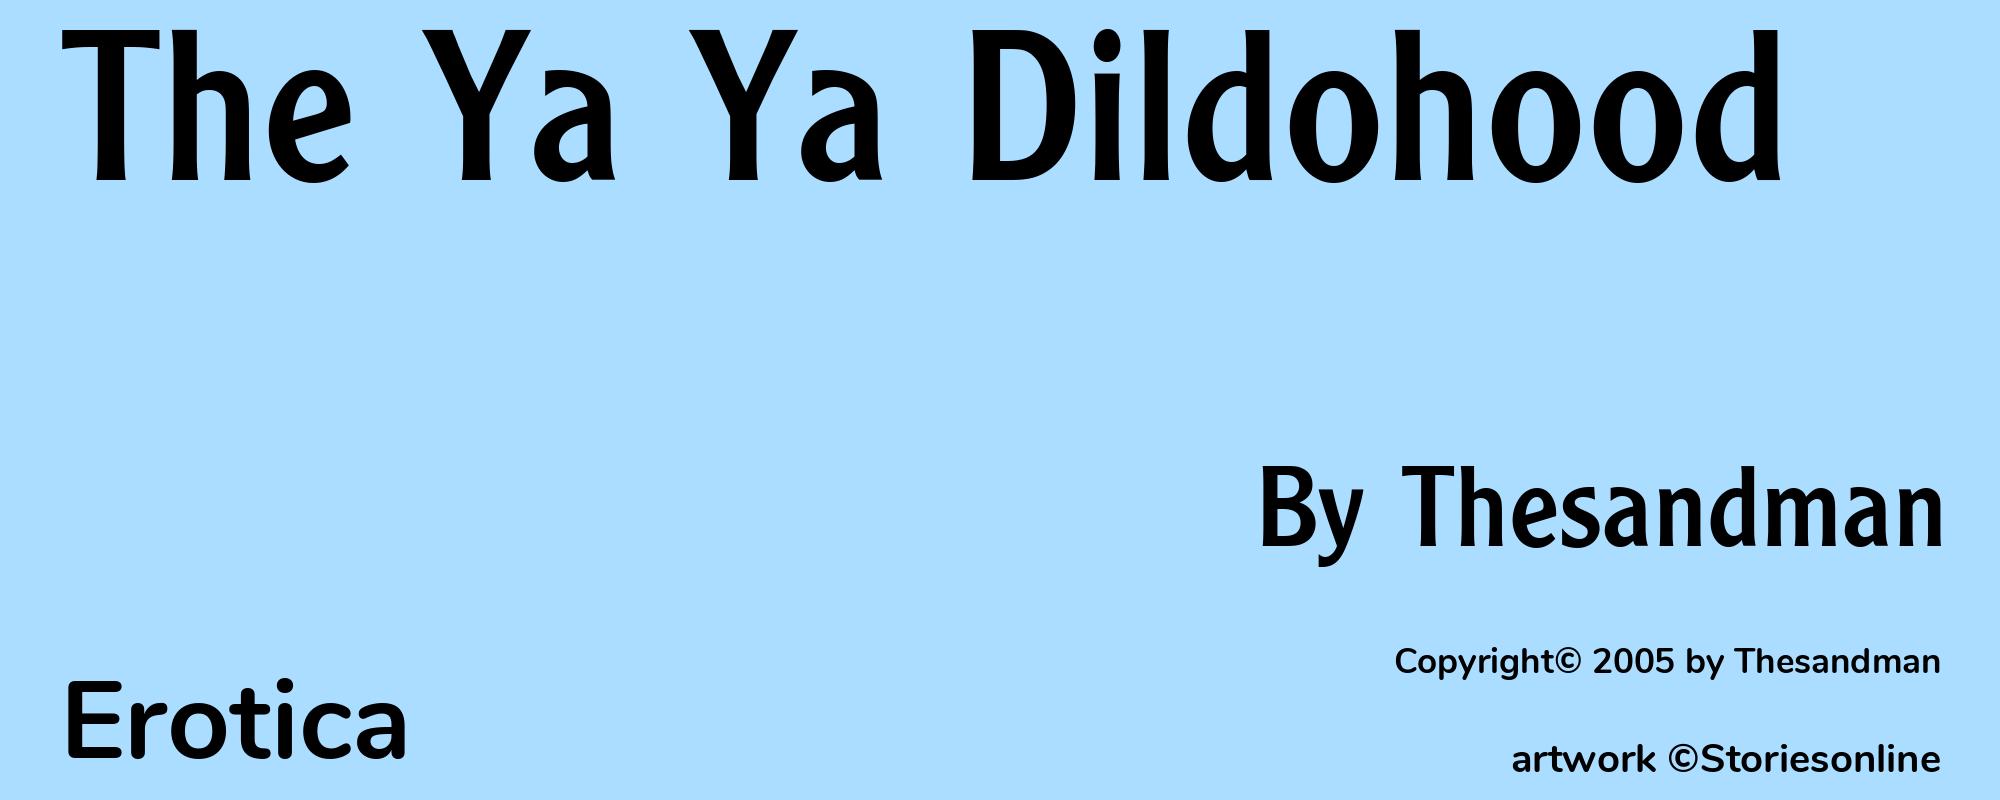 The Ya Ya Dildohood - Cover